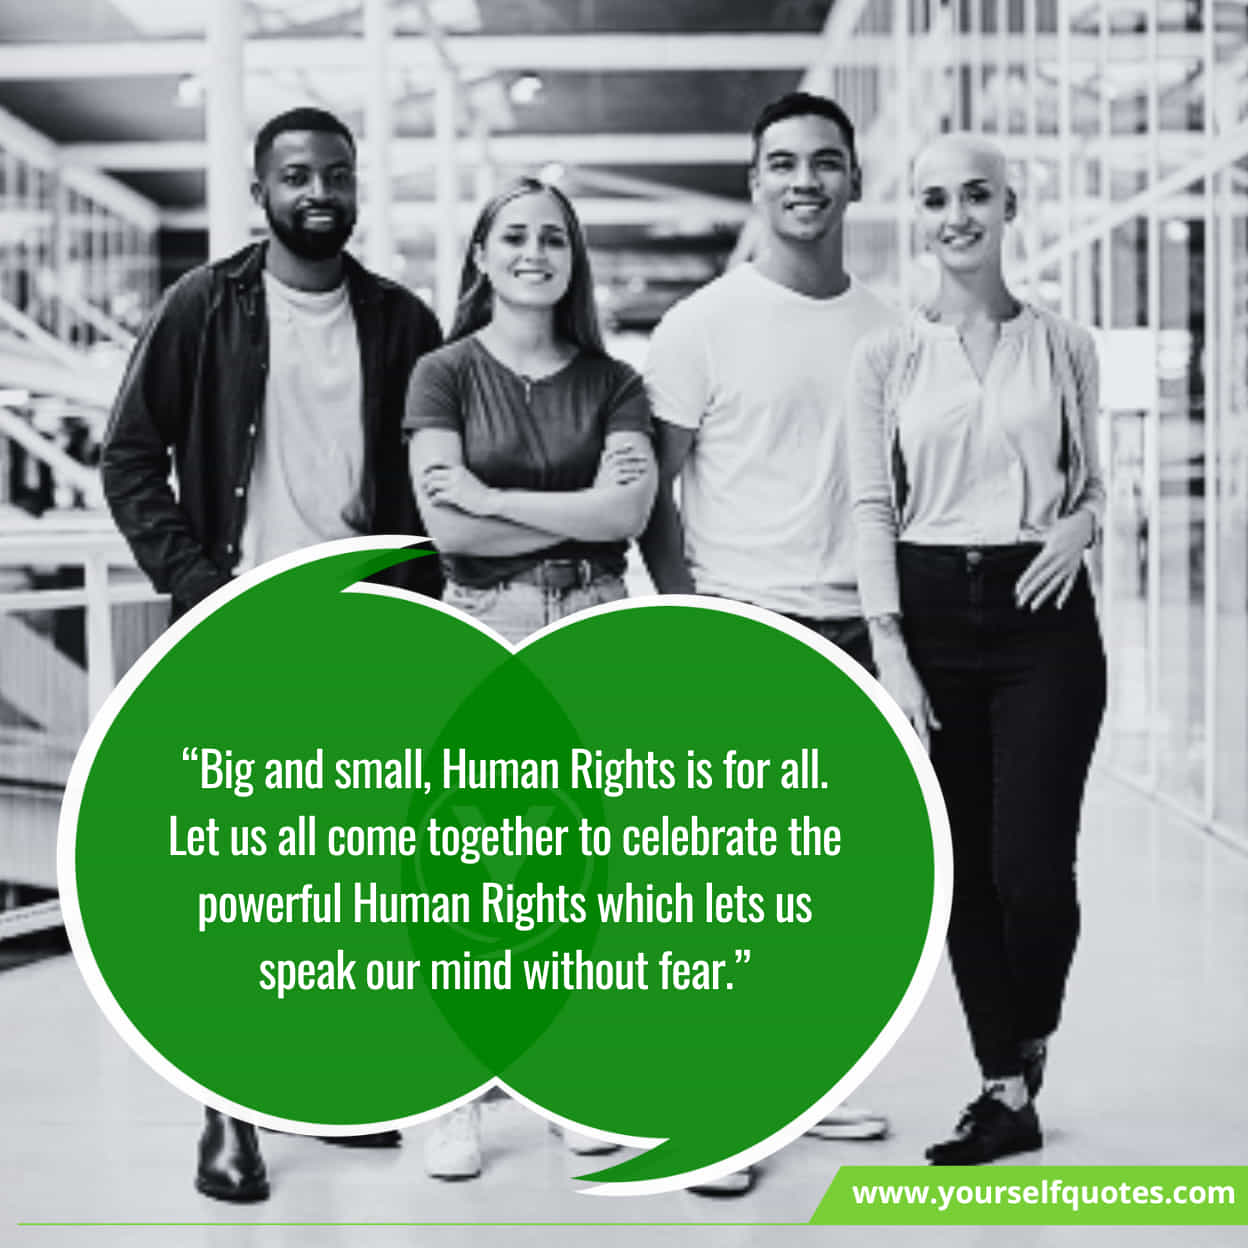 Human Rights Day Slogans & Sayings